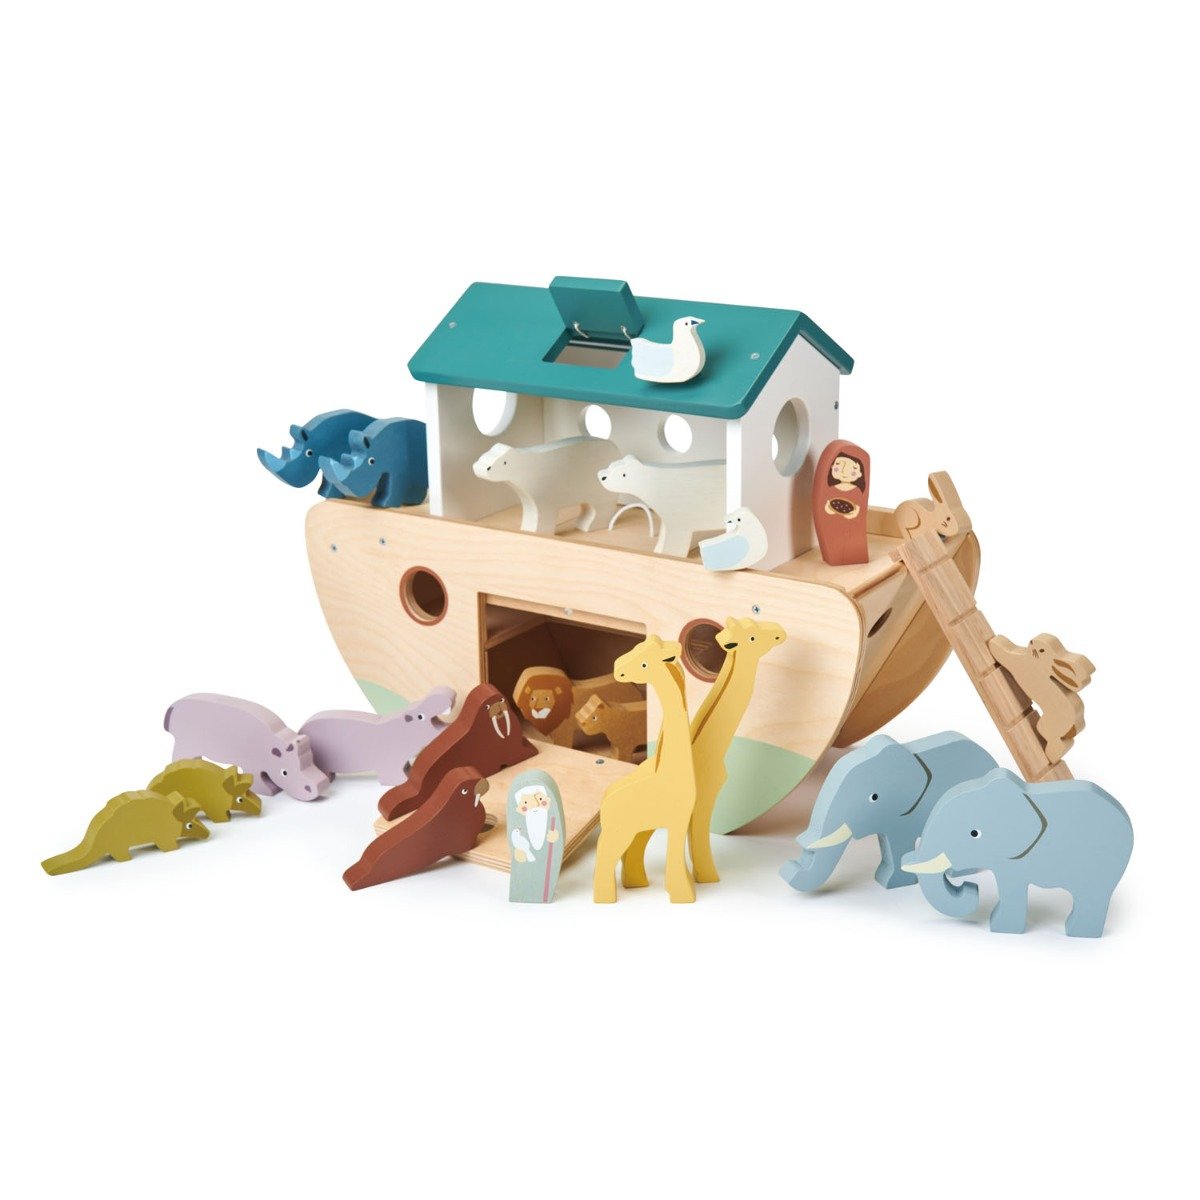 Arca lui Noe din lemn, Tender Leaf Toys, 25 piese Masinute 2023-09-24